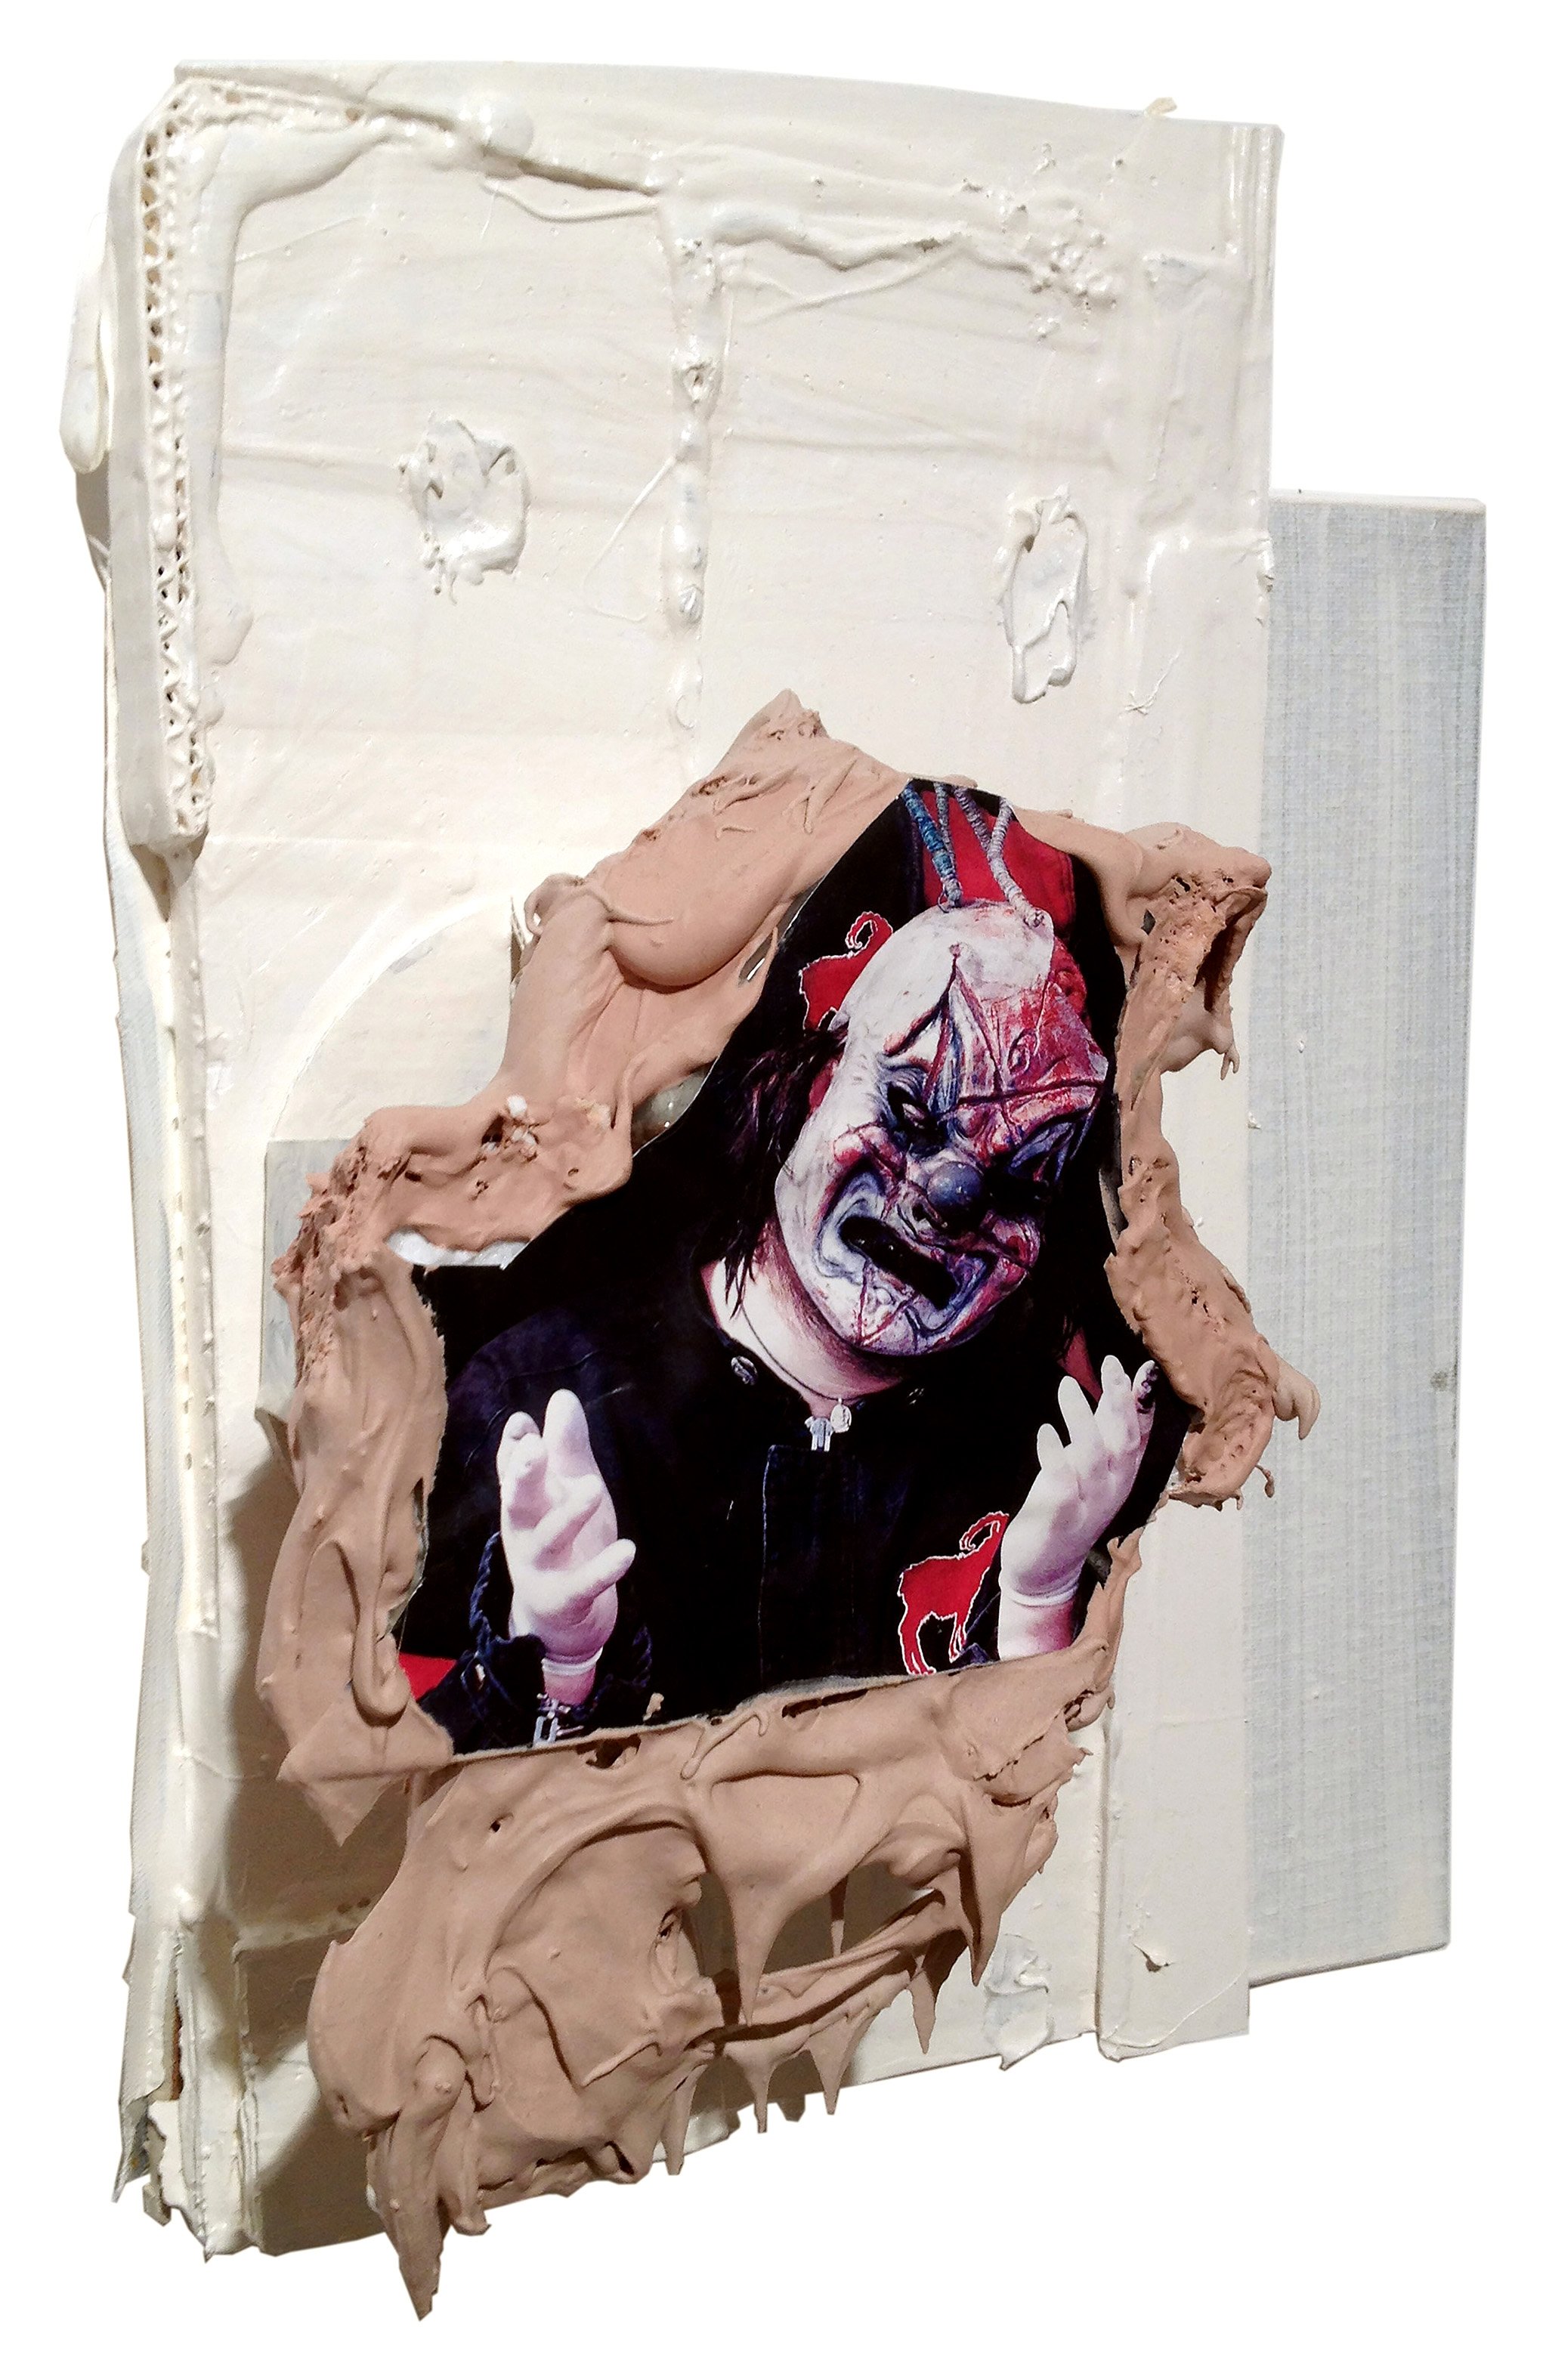  Drew Beattie  Misery   2009 acrylic, bondo and collage on canvas 17 x 12 inches 